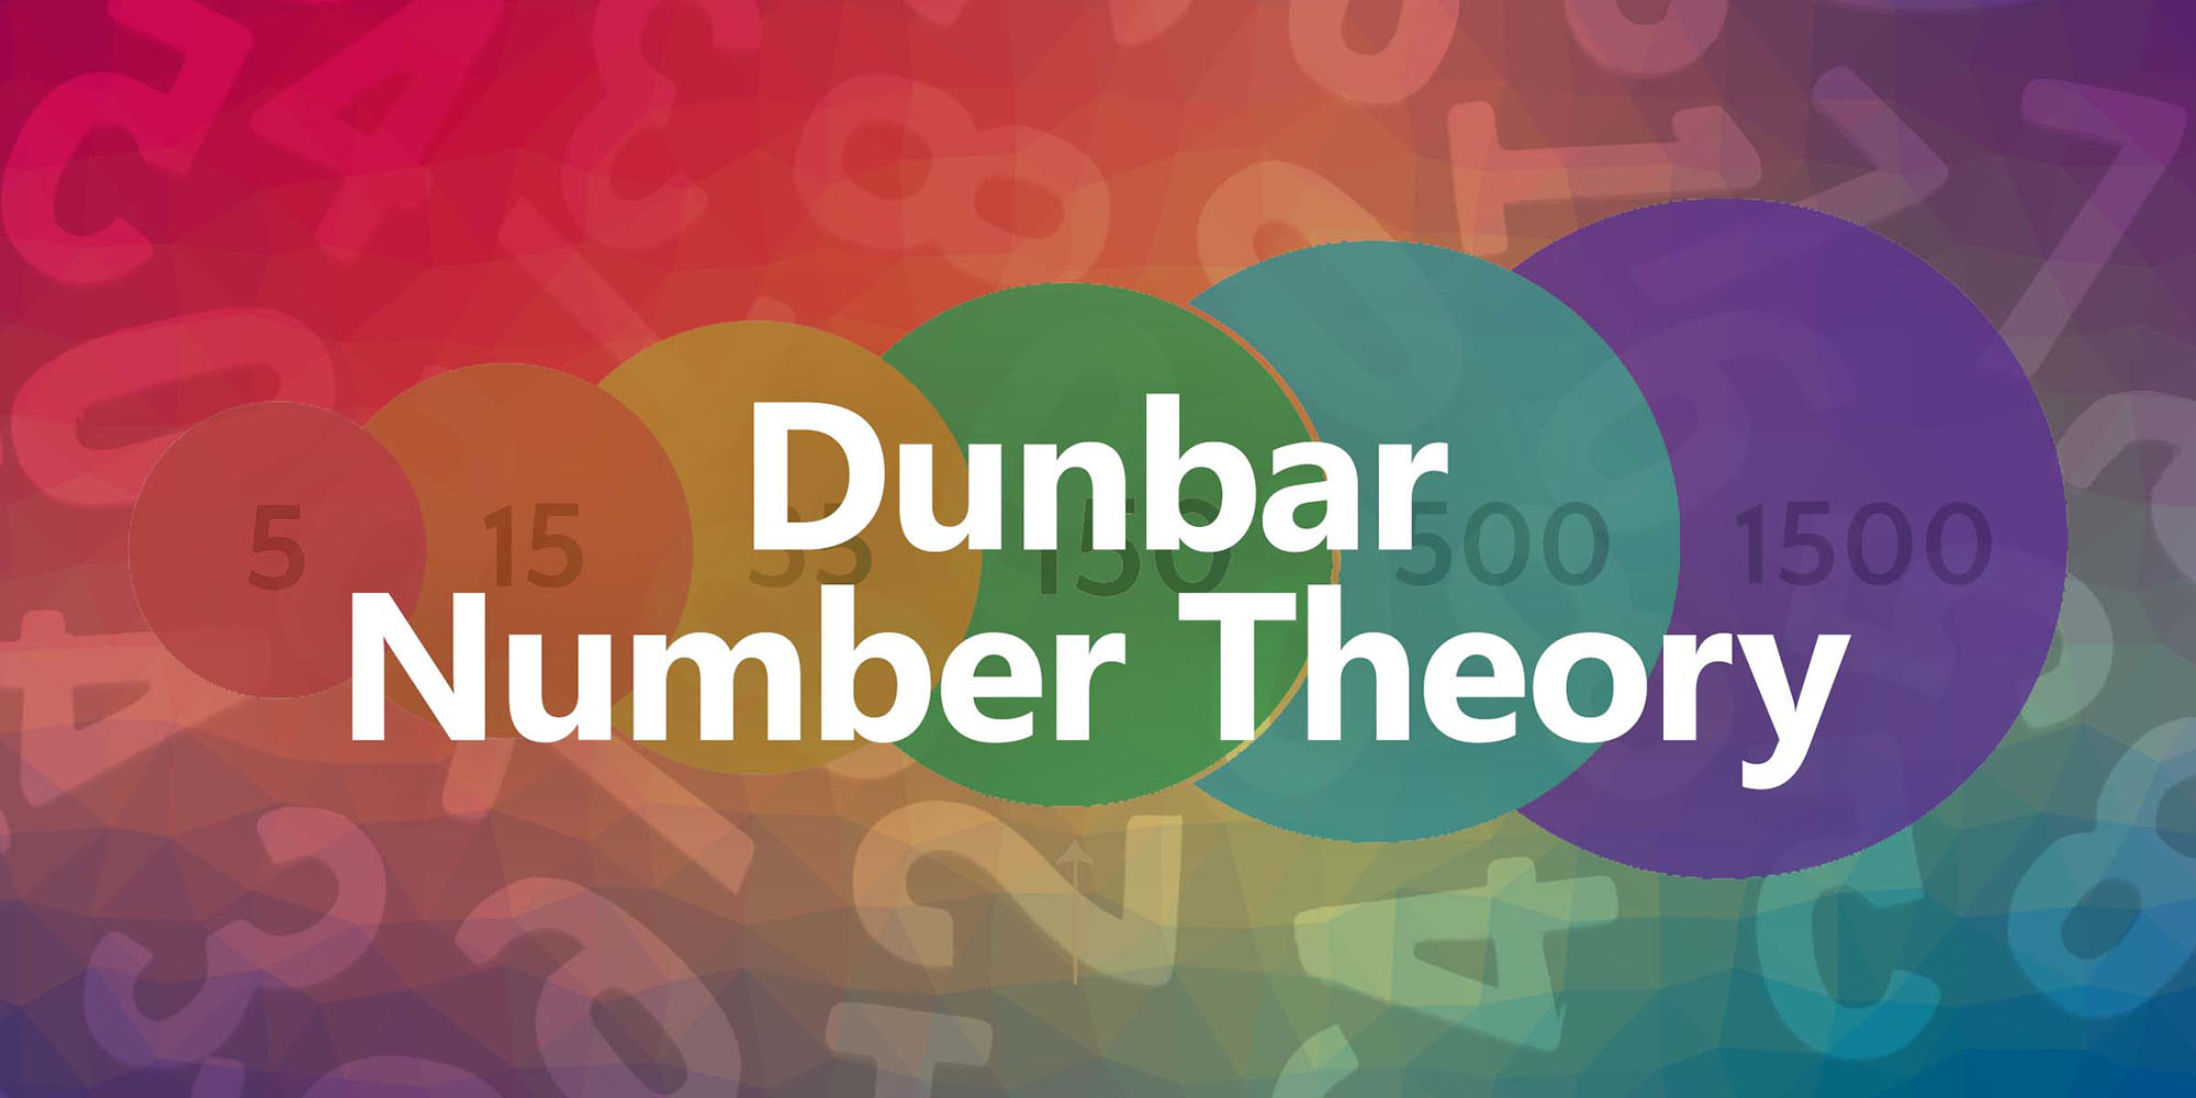 Dunbar Number Theory